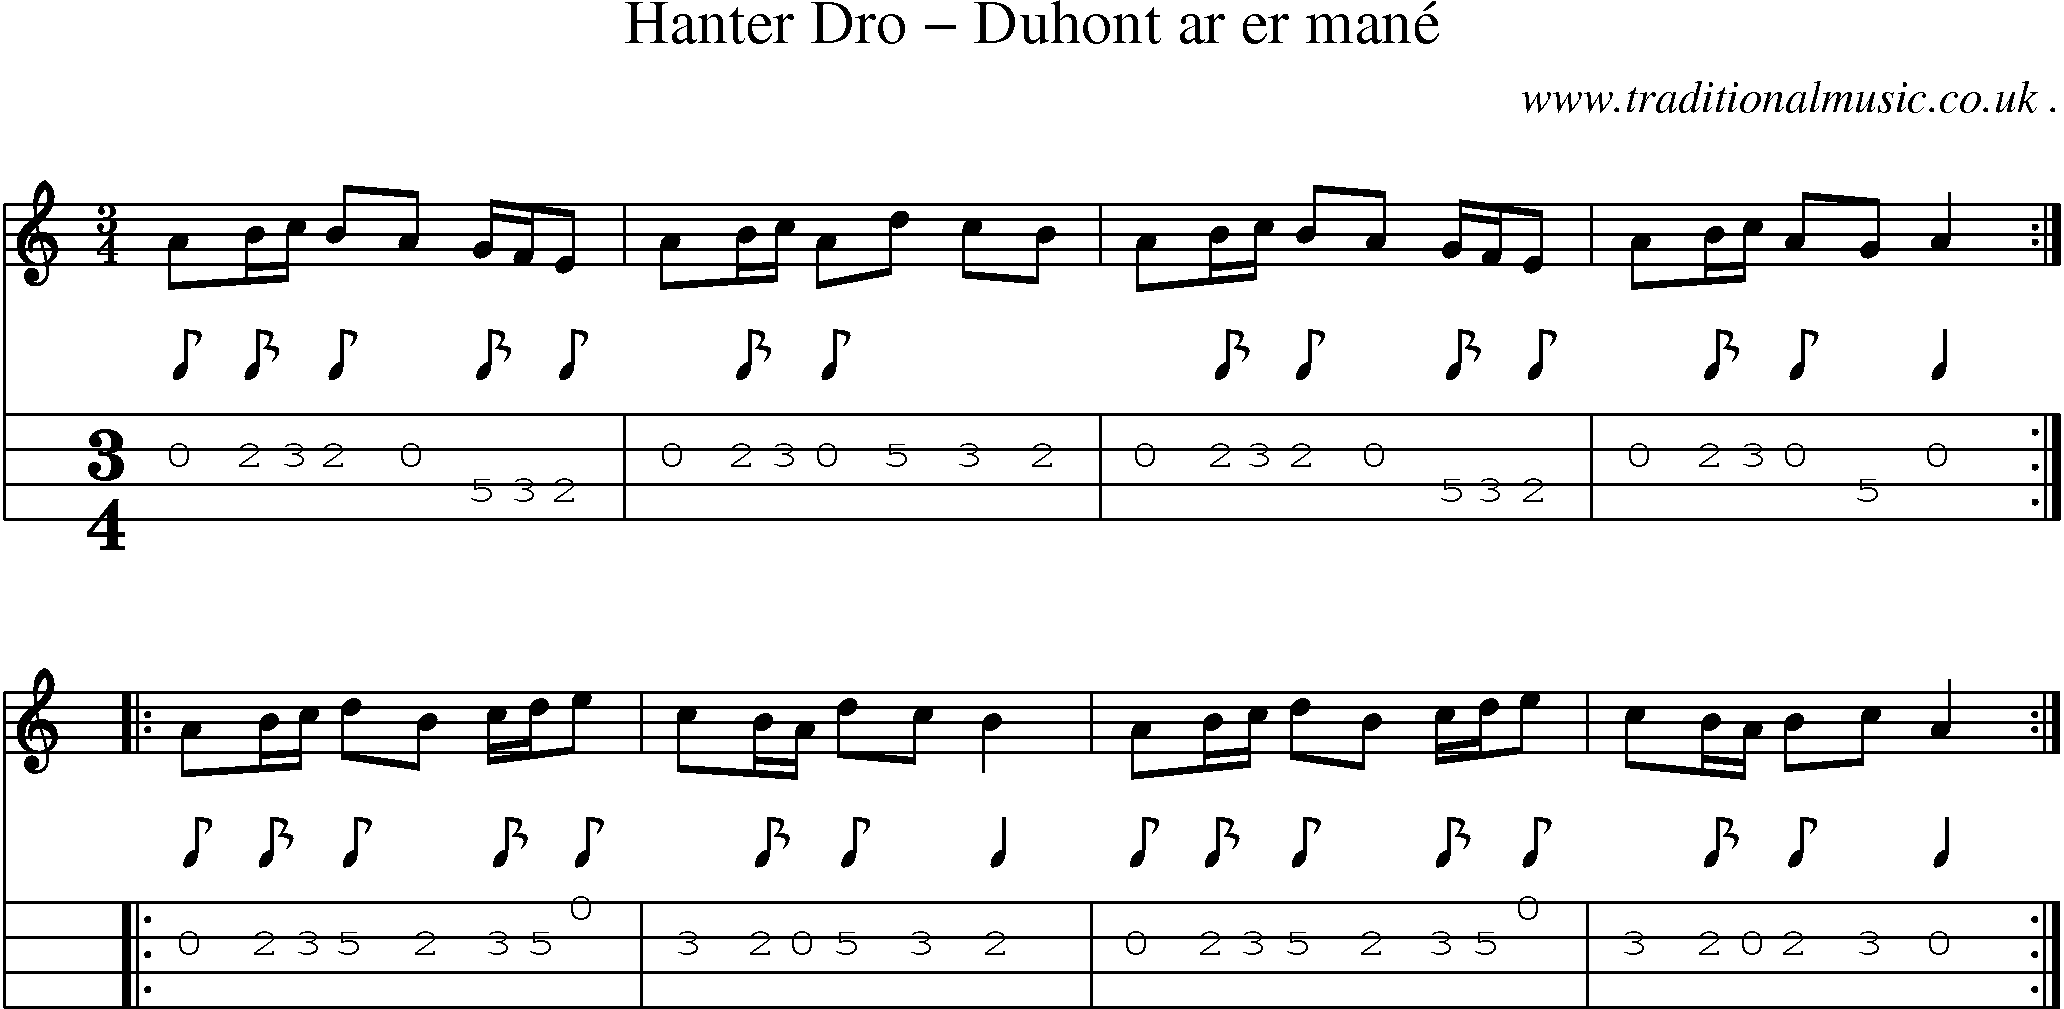 Sheet-Music and Mandolin Tabs for Hanter Dro Duhont Ar Er Mane